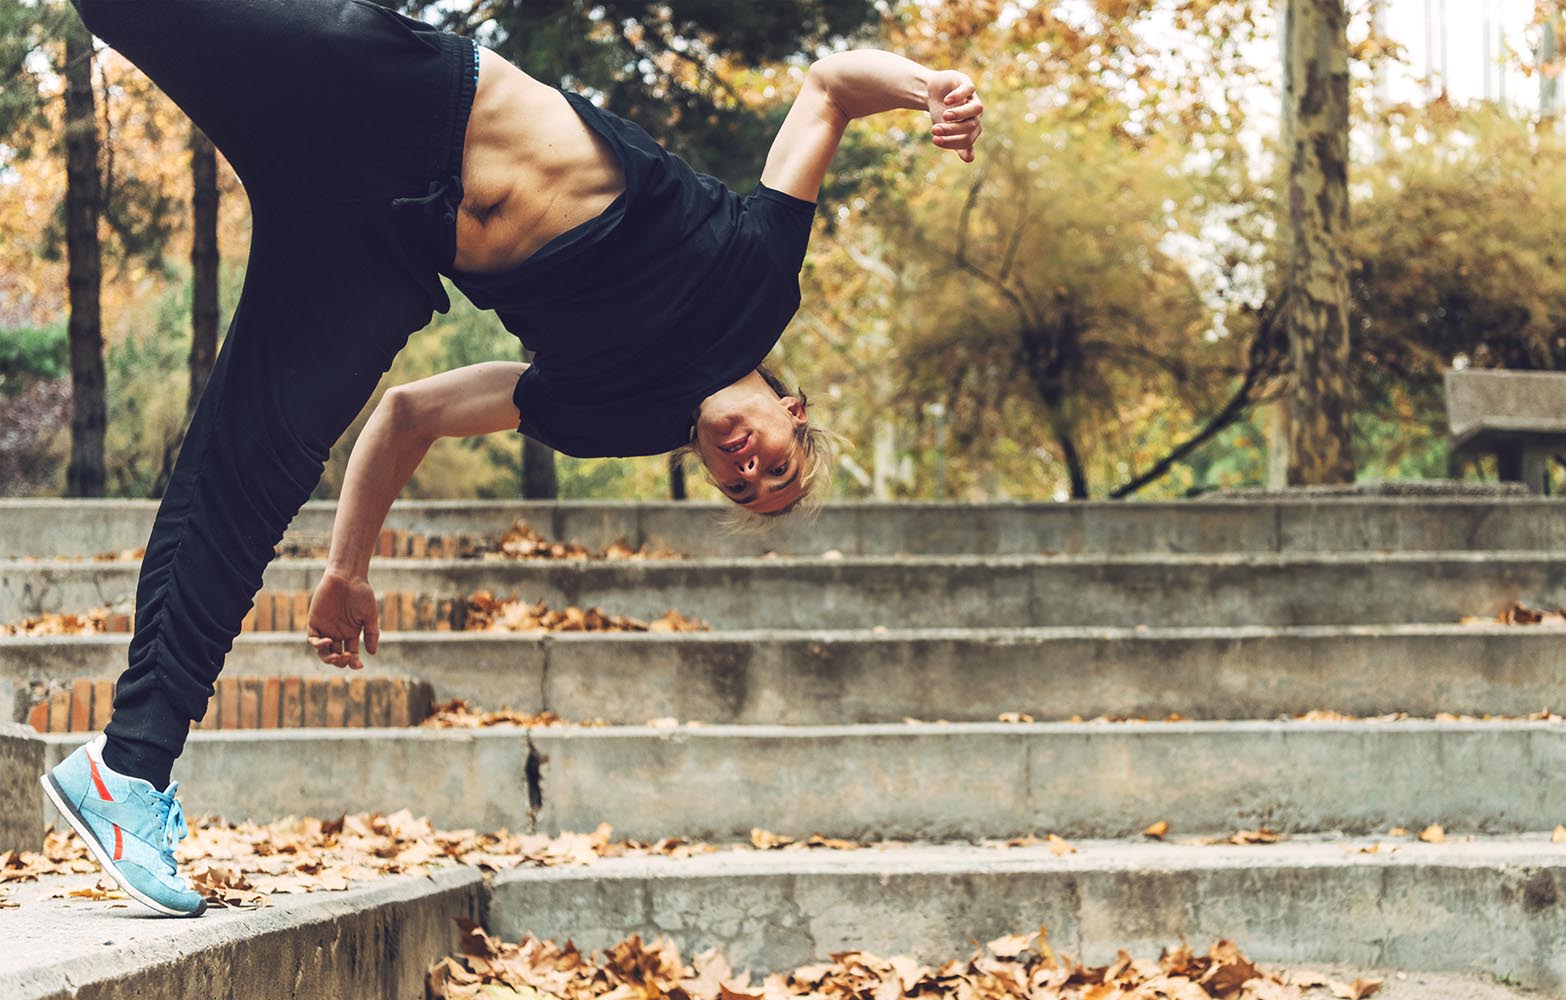 Muscular man performing jump in park